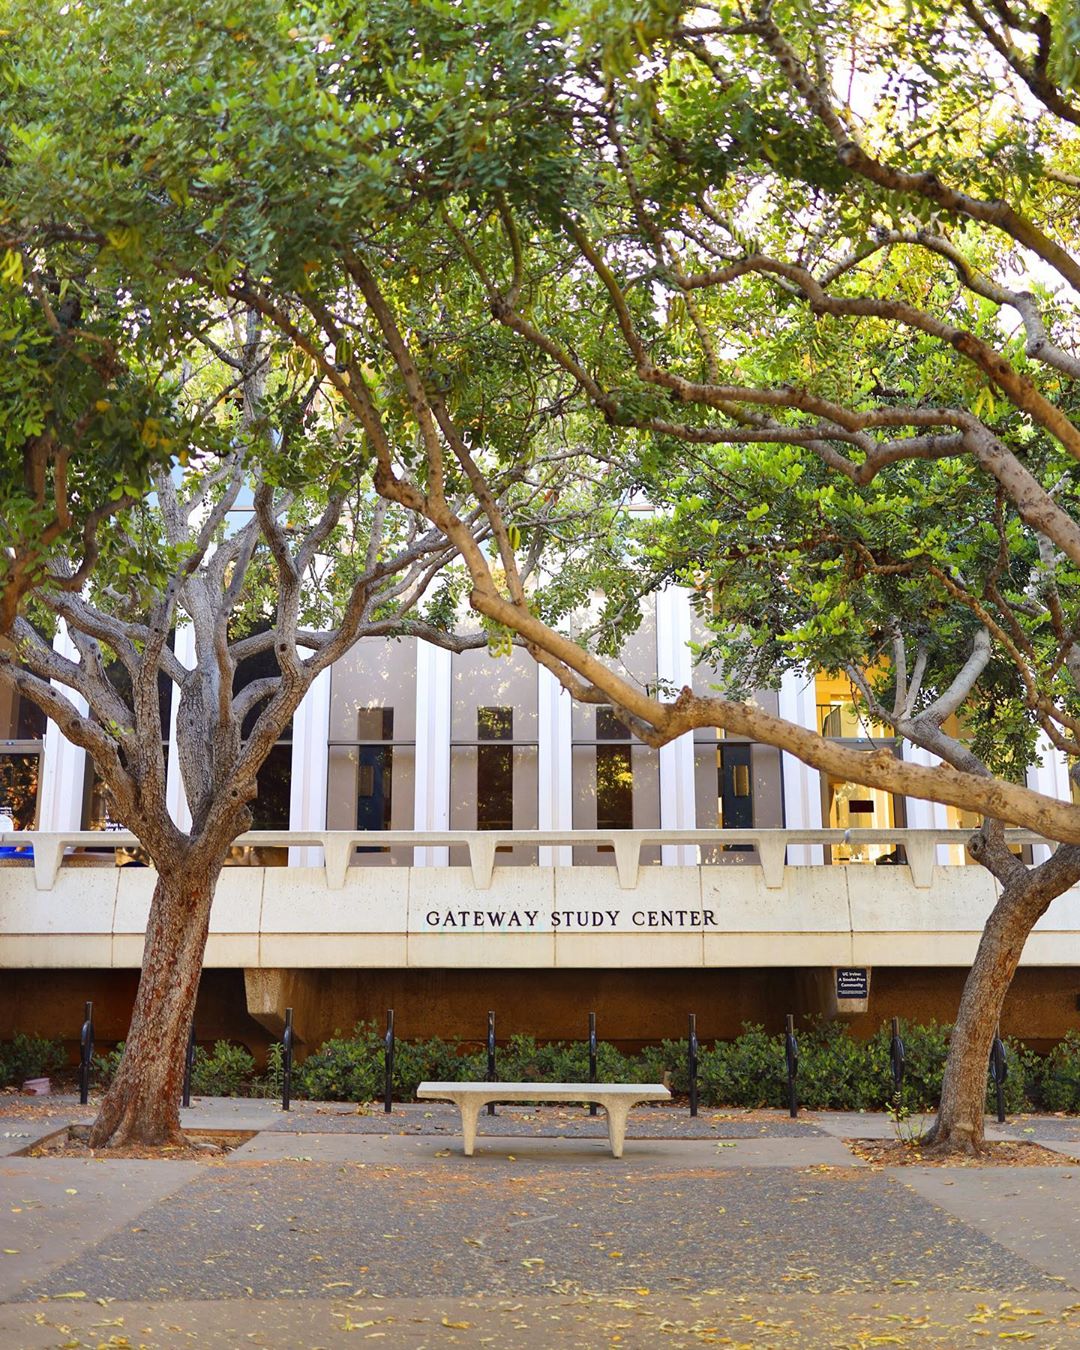 Campus Photo of the University of California, Irvine. Photo by Instagram user @thiswanderinglens